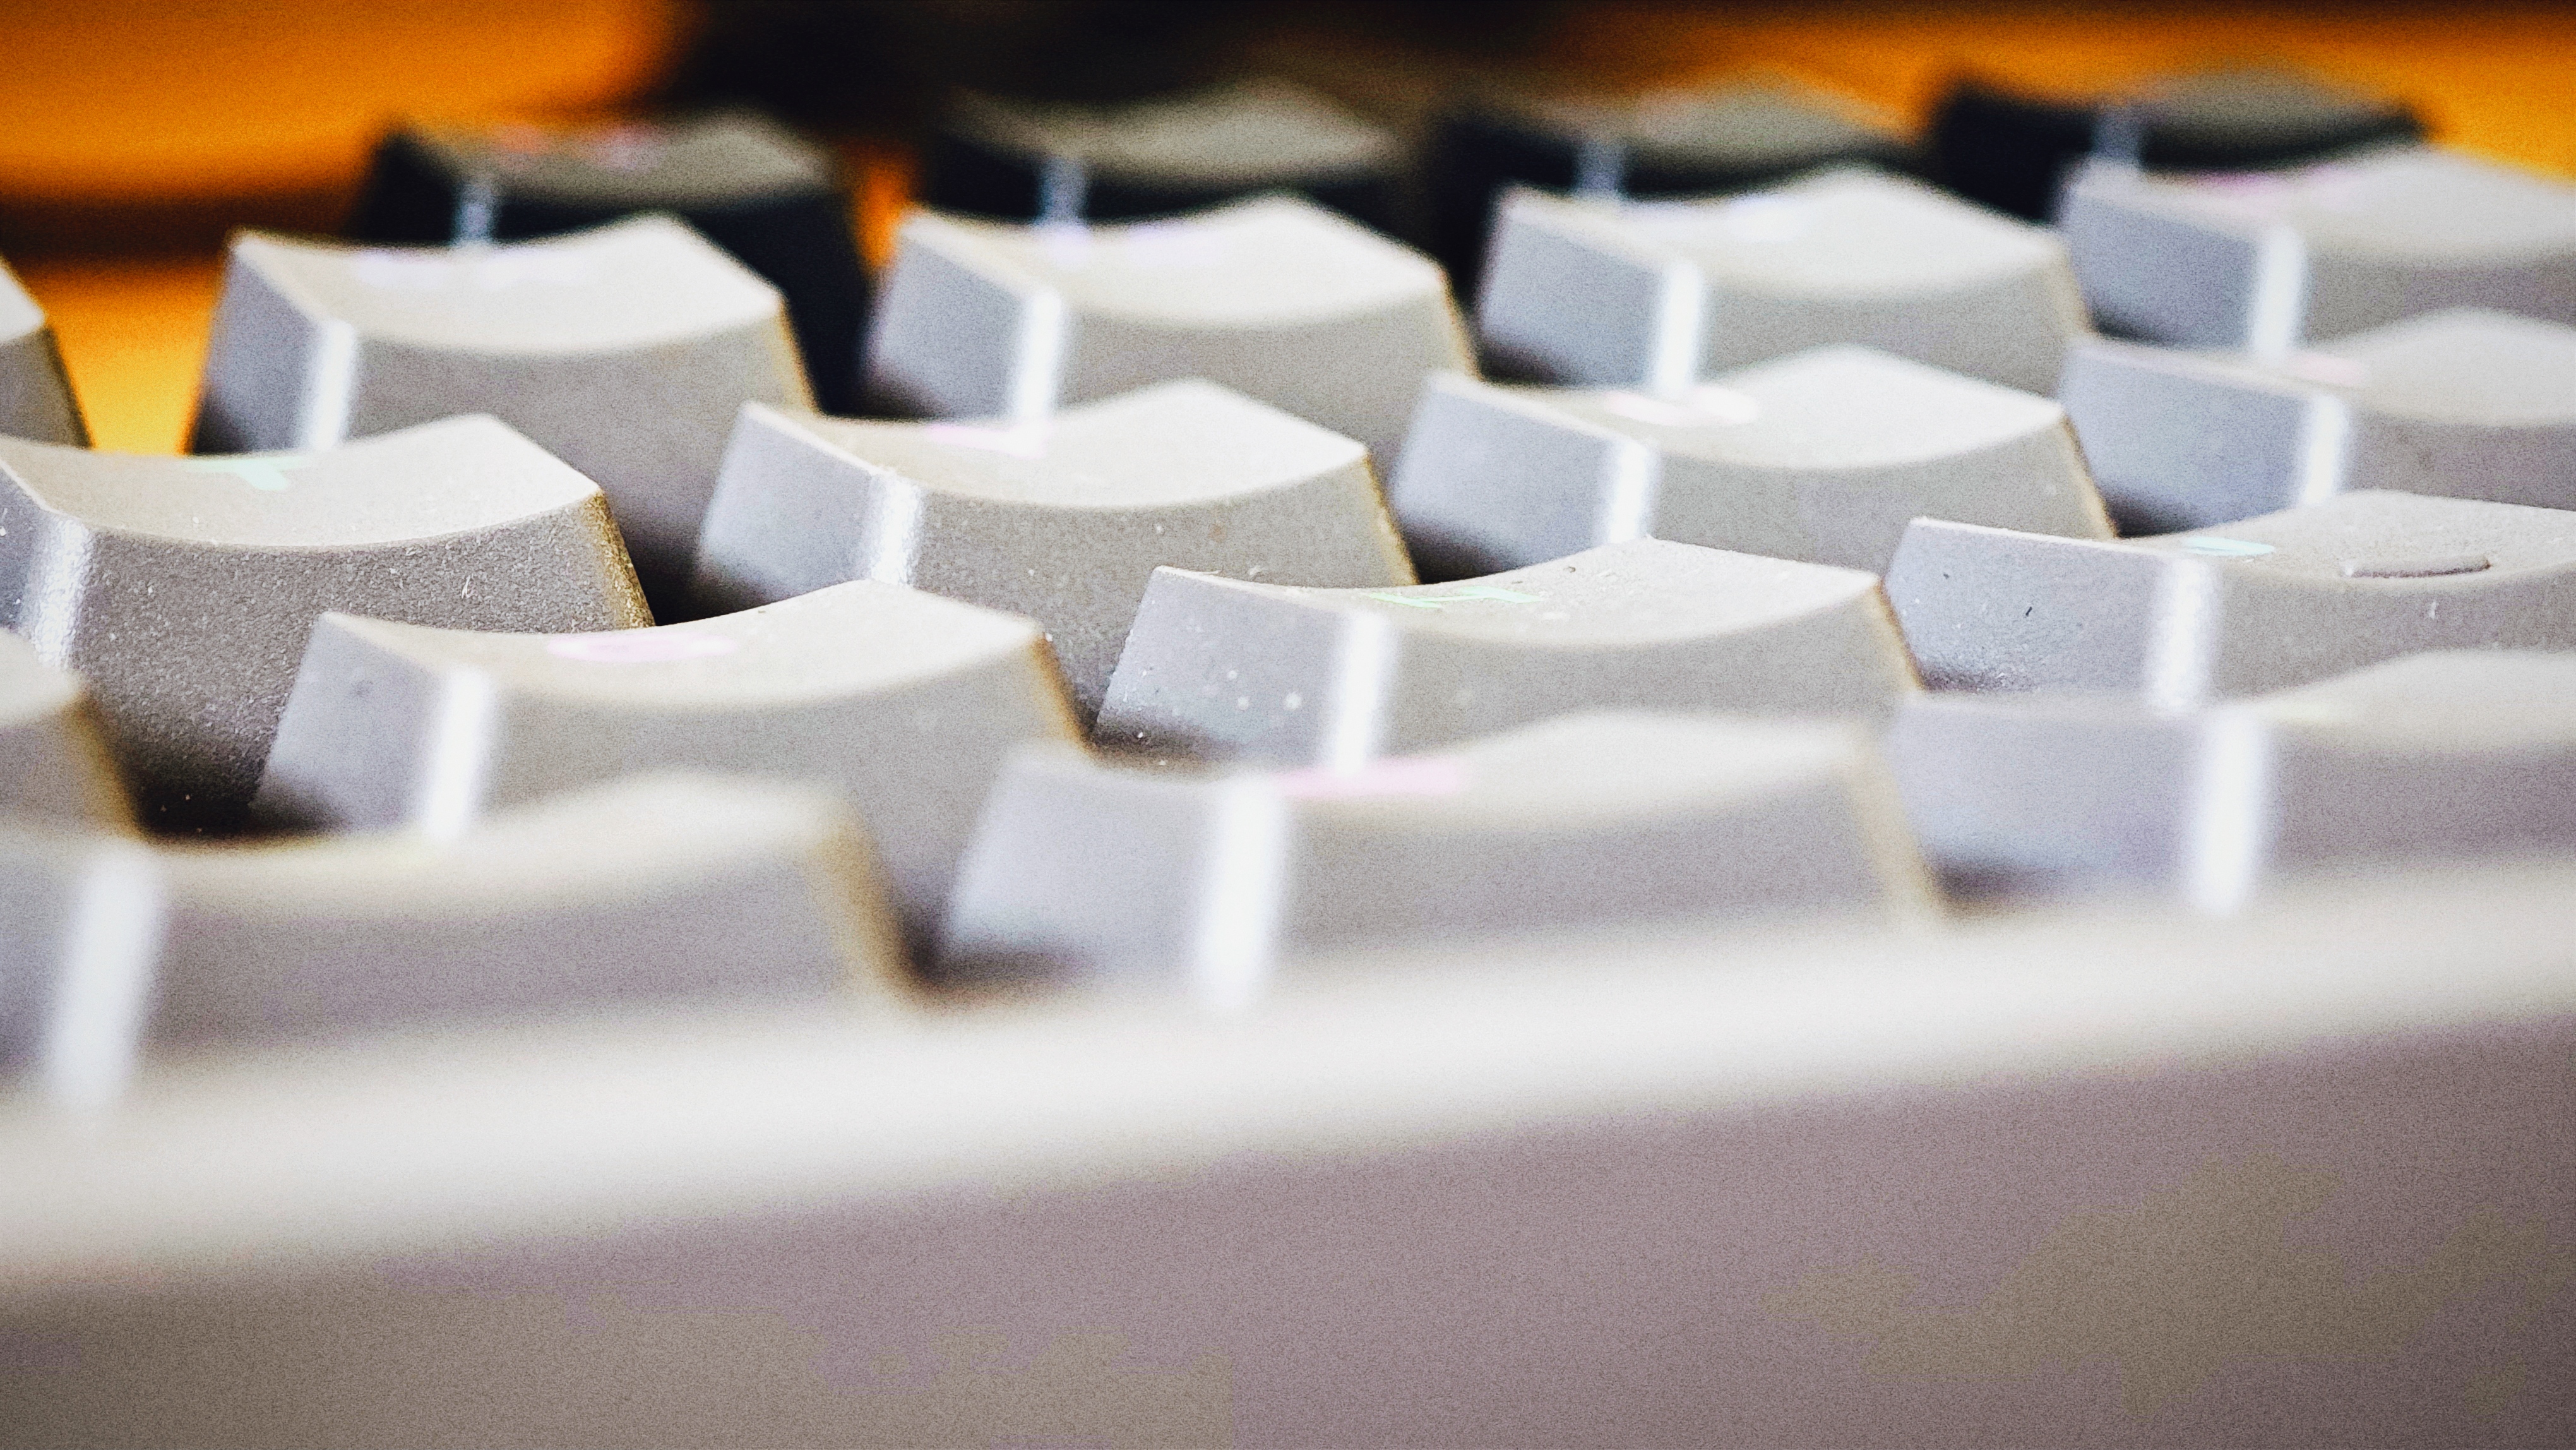 A black Drop CTRL V2 keyboard on a wooden desk